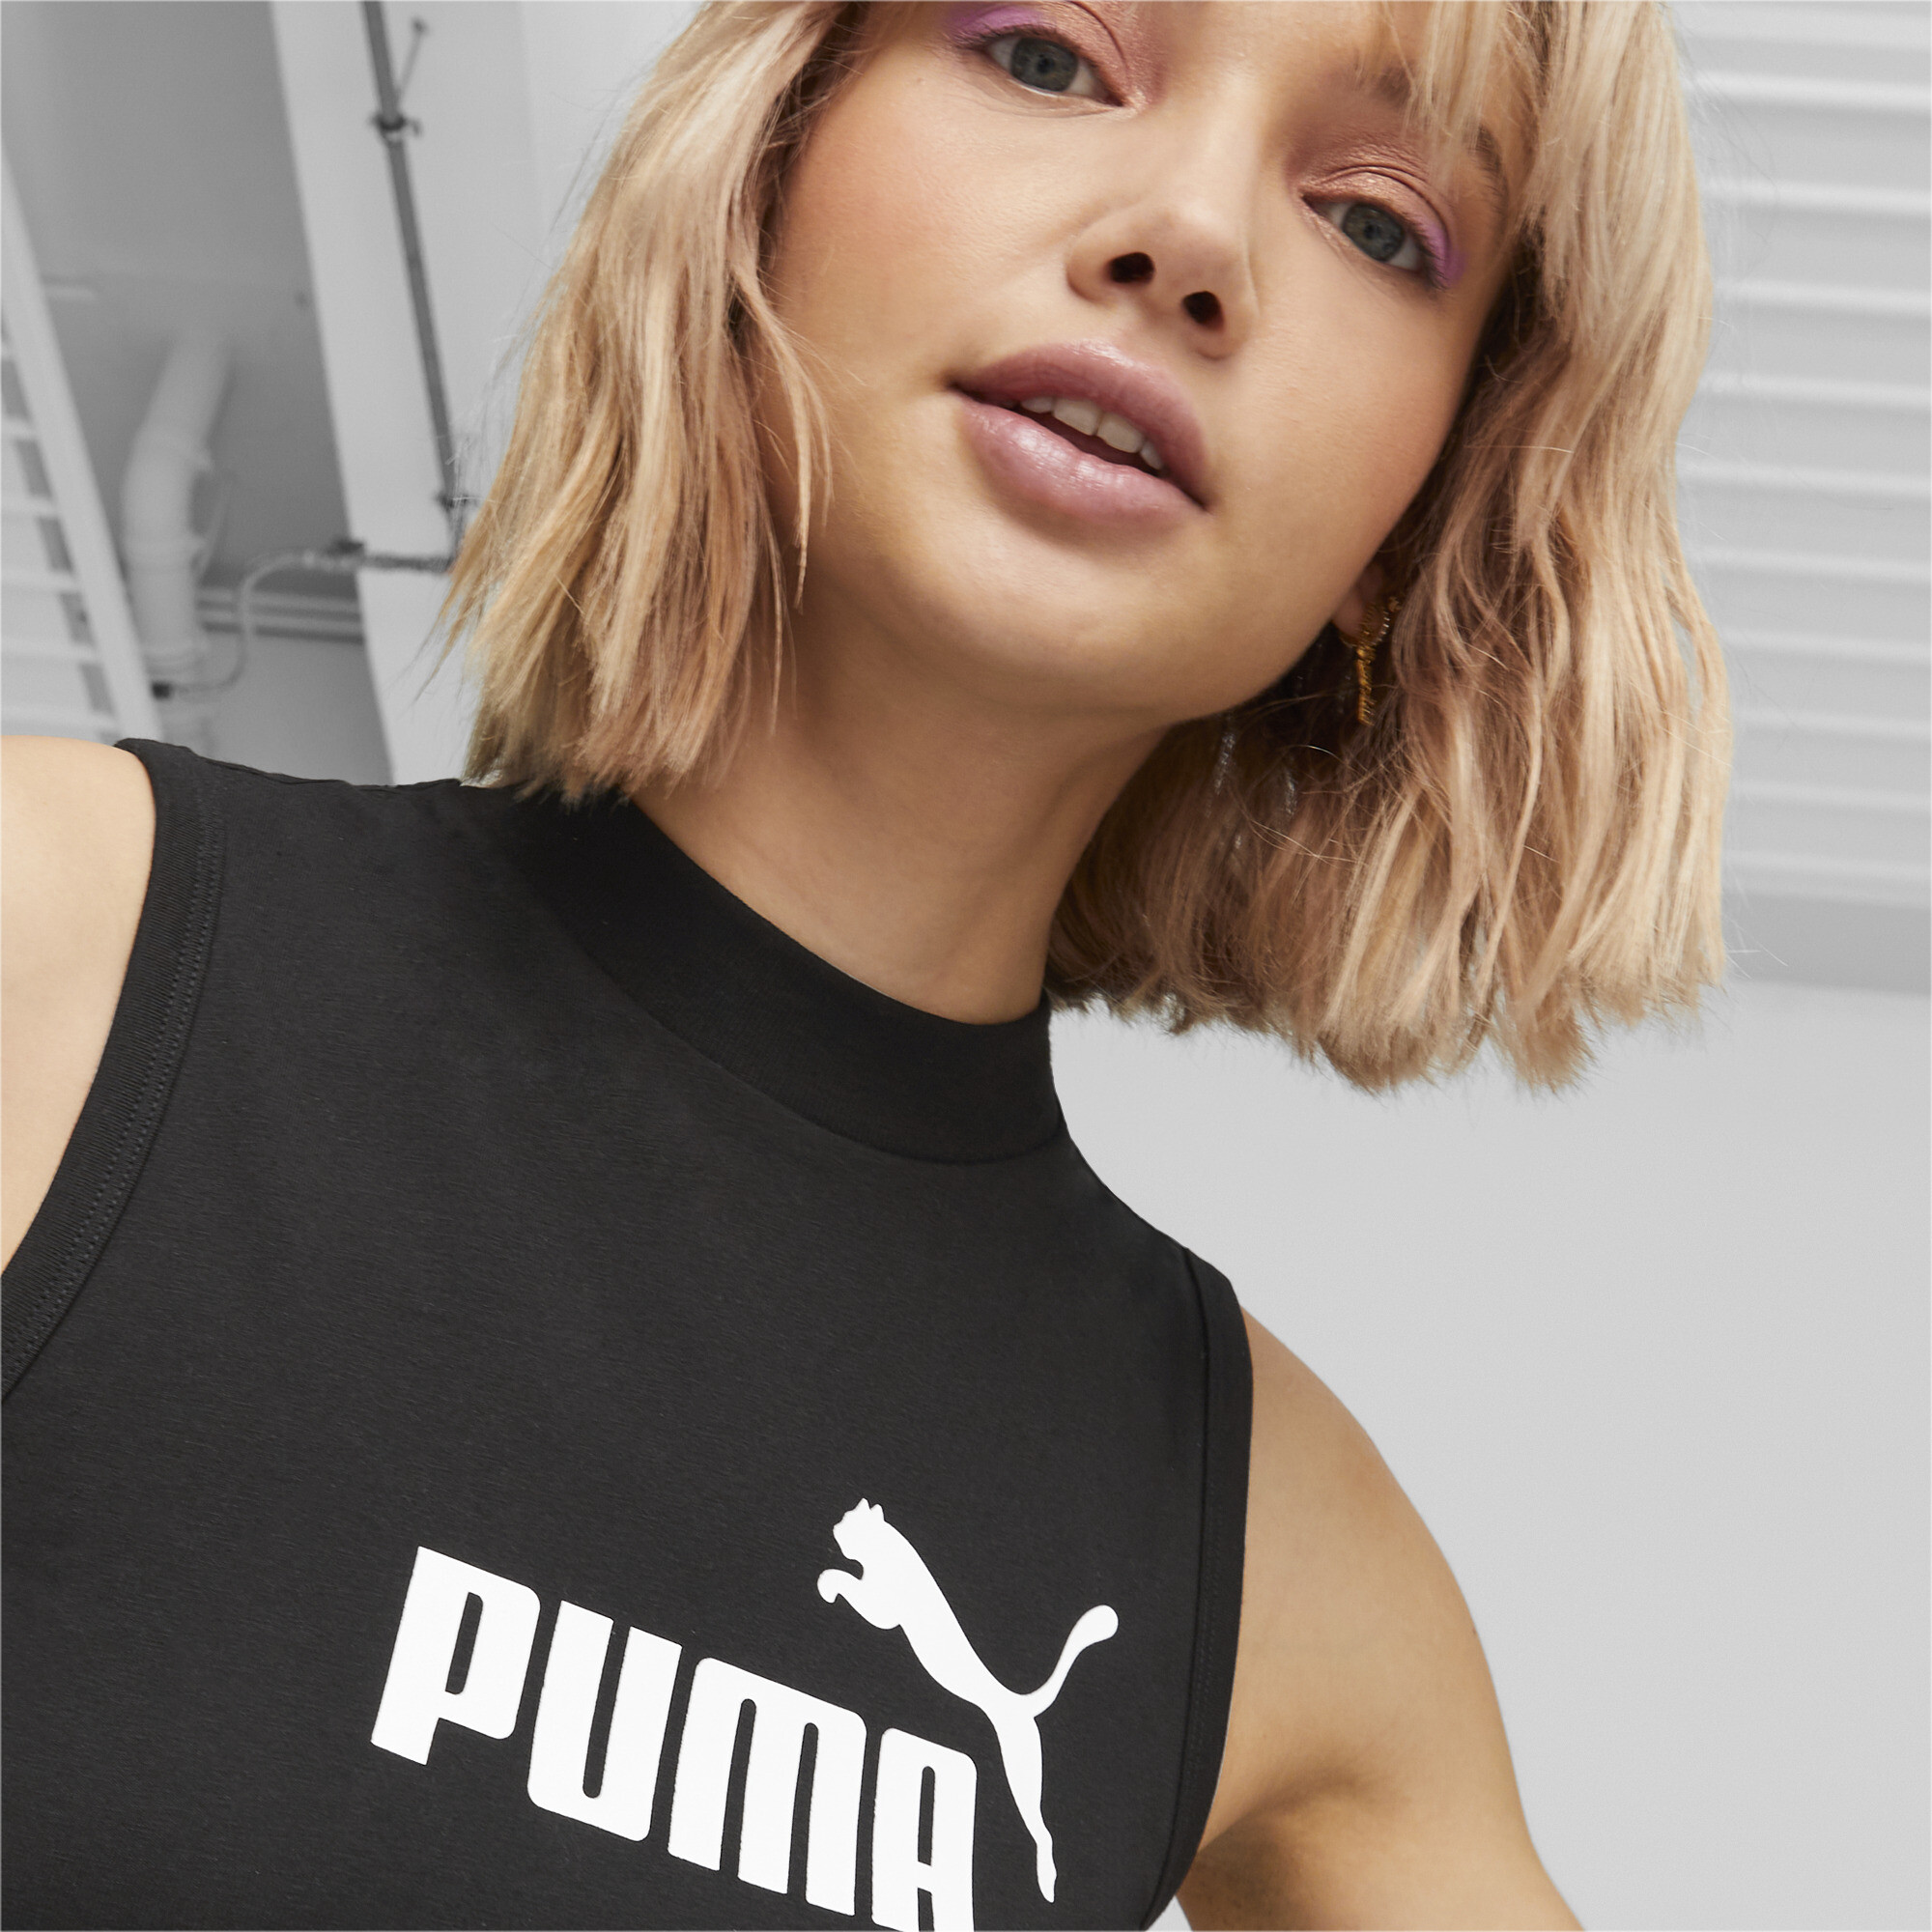 Women's Puma Essentials Slim Logo Tank Top, Black, Size XXS, Clothing